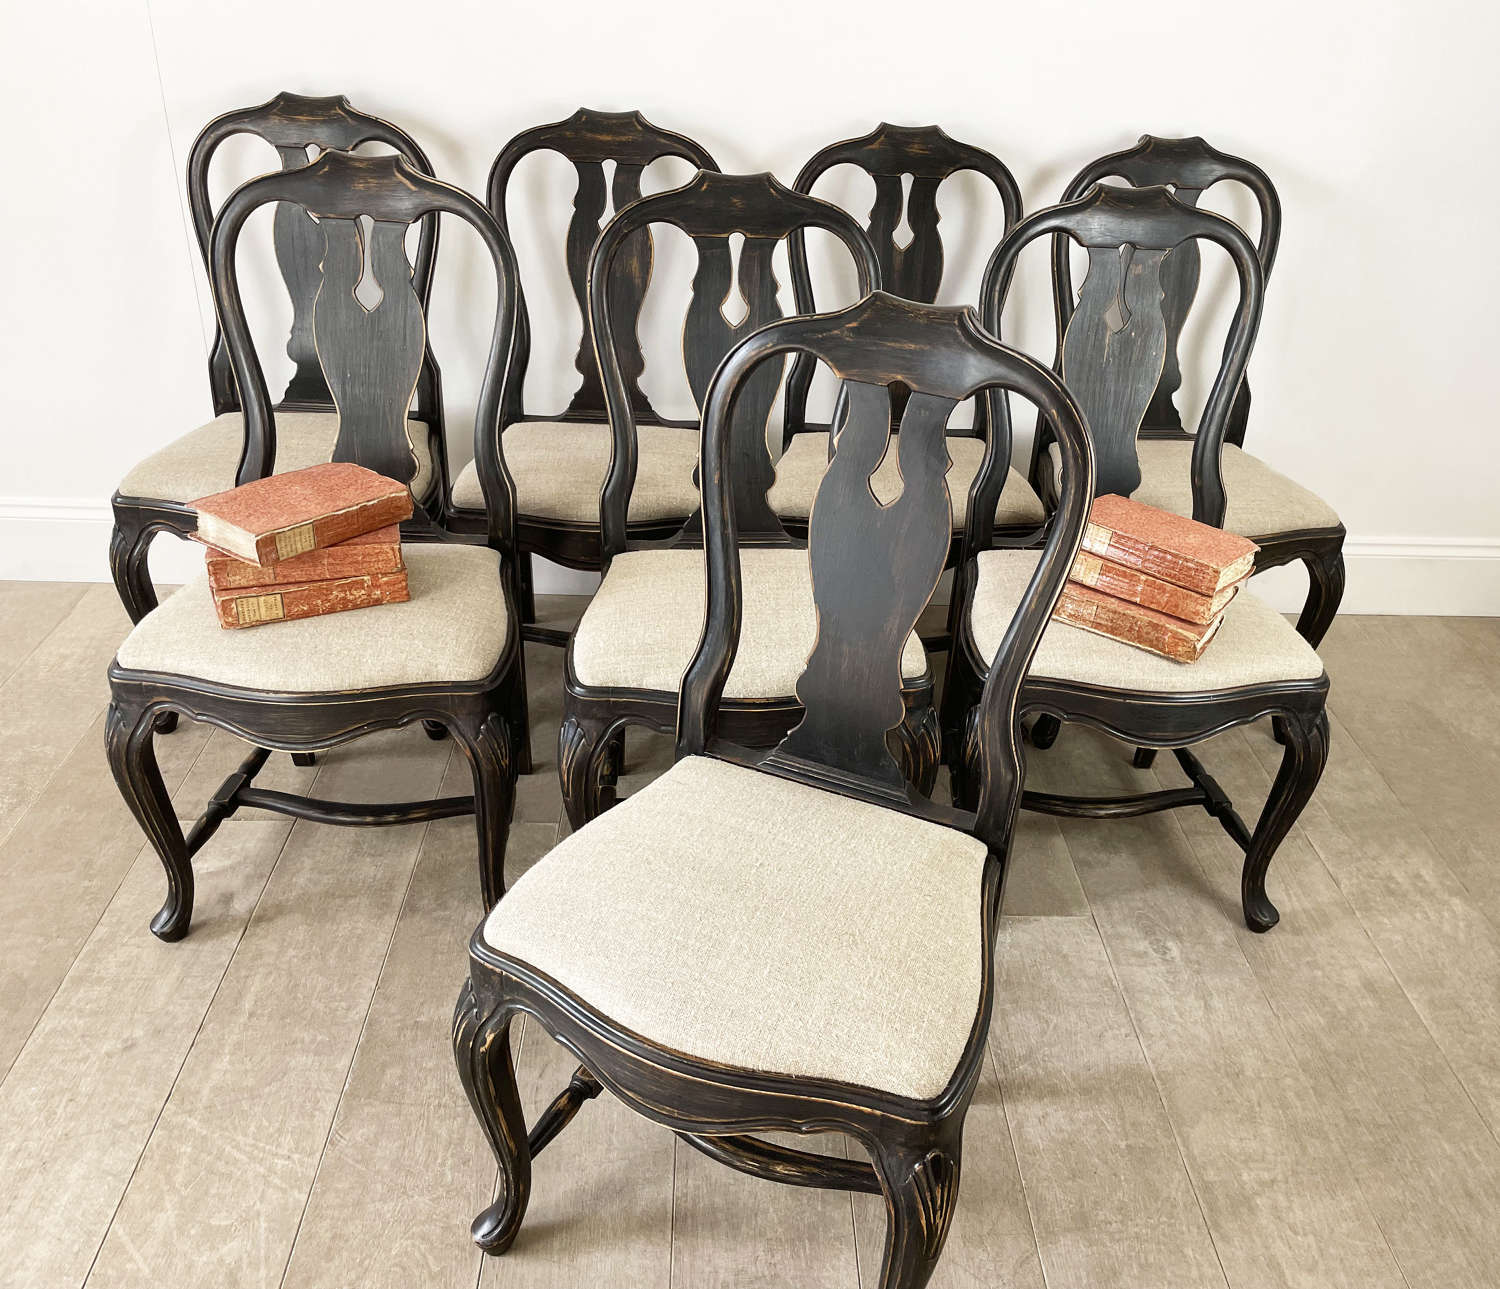 Set of 8 late 19th c Swedish Dining Chairs - circa 1890